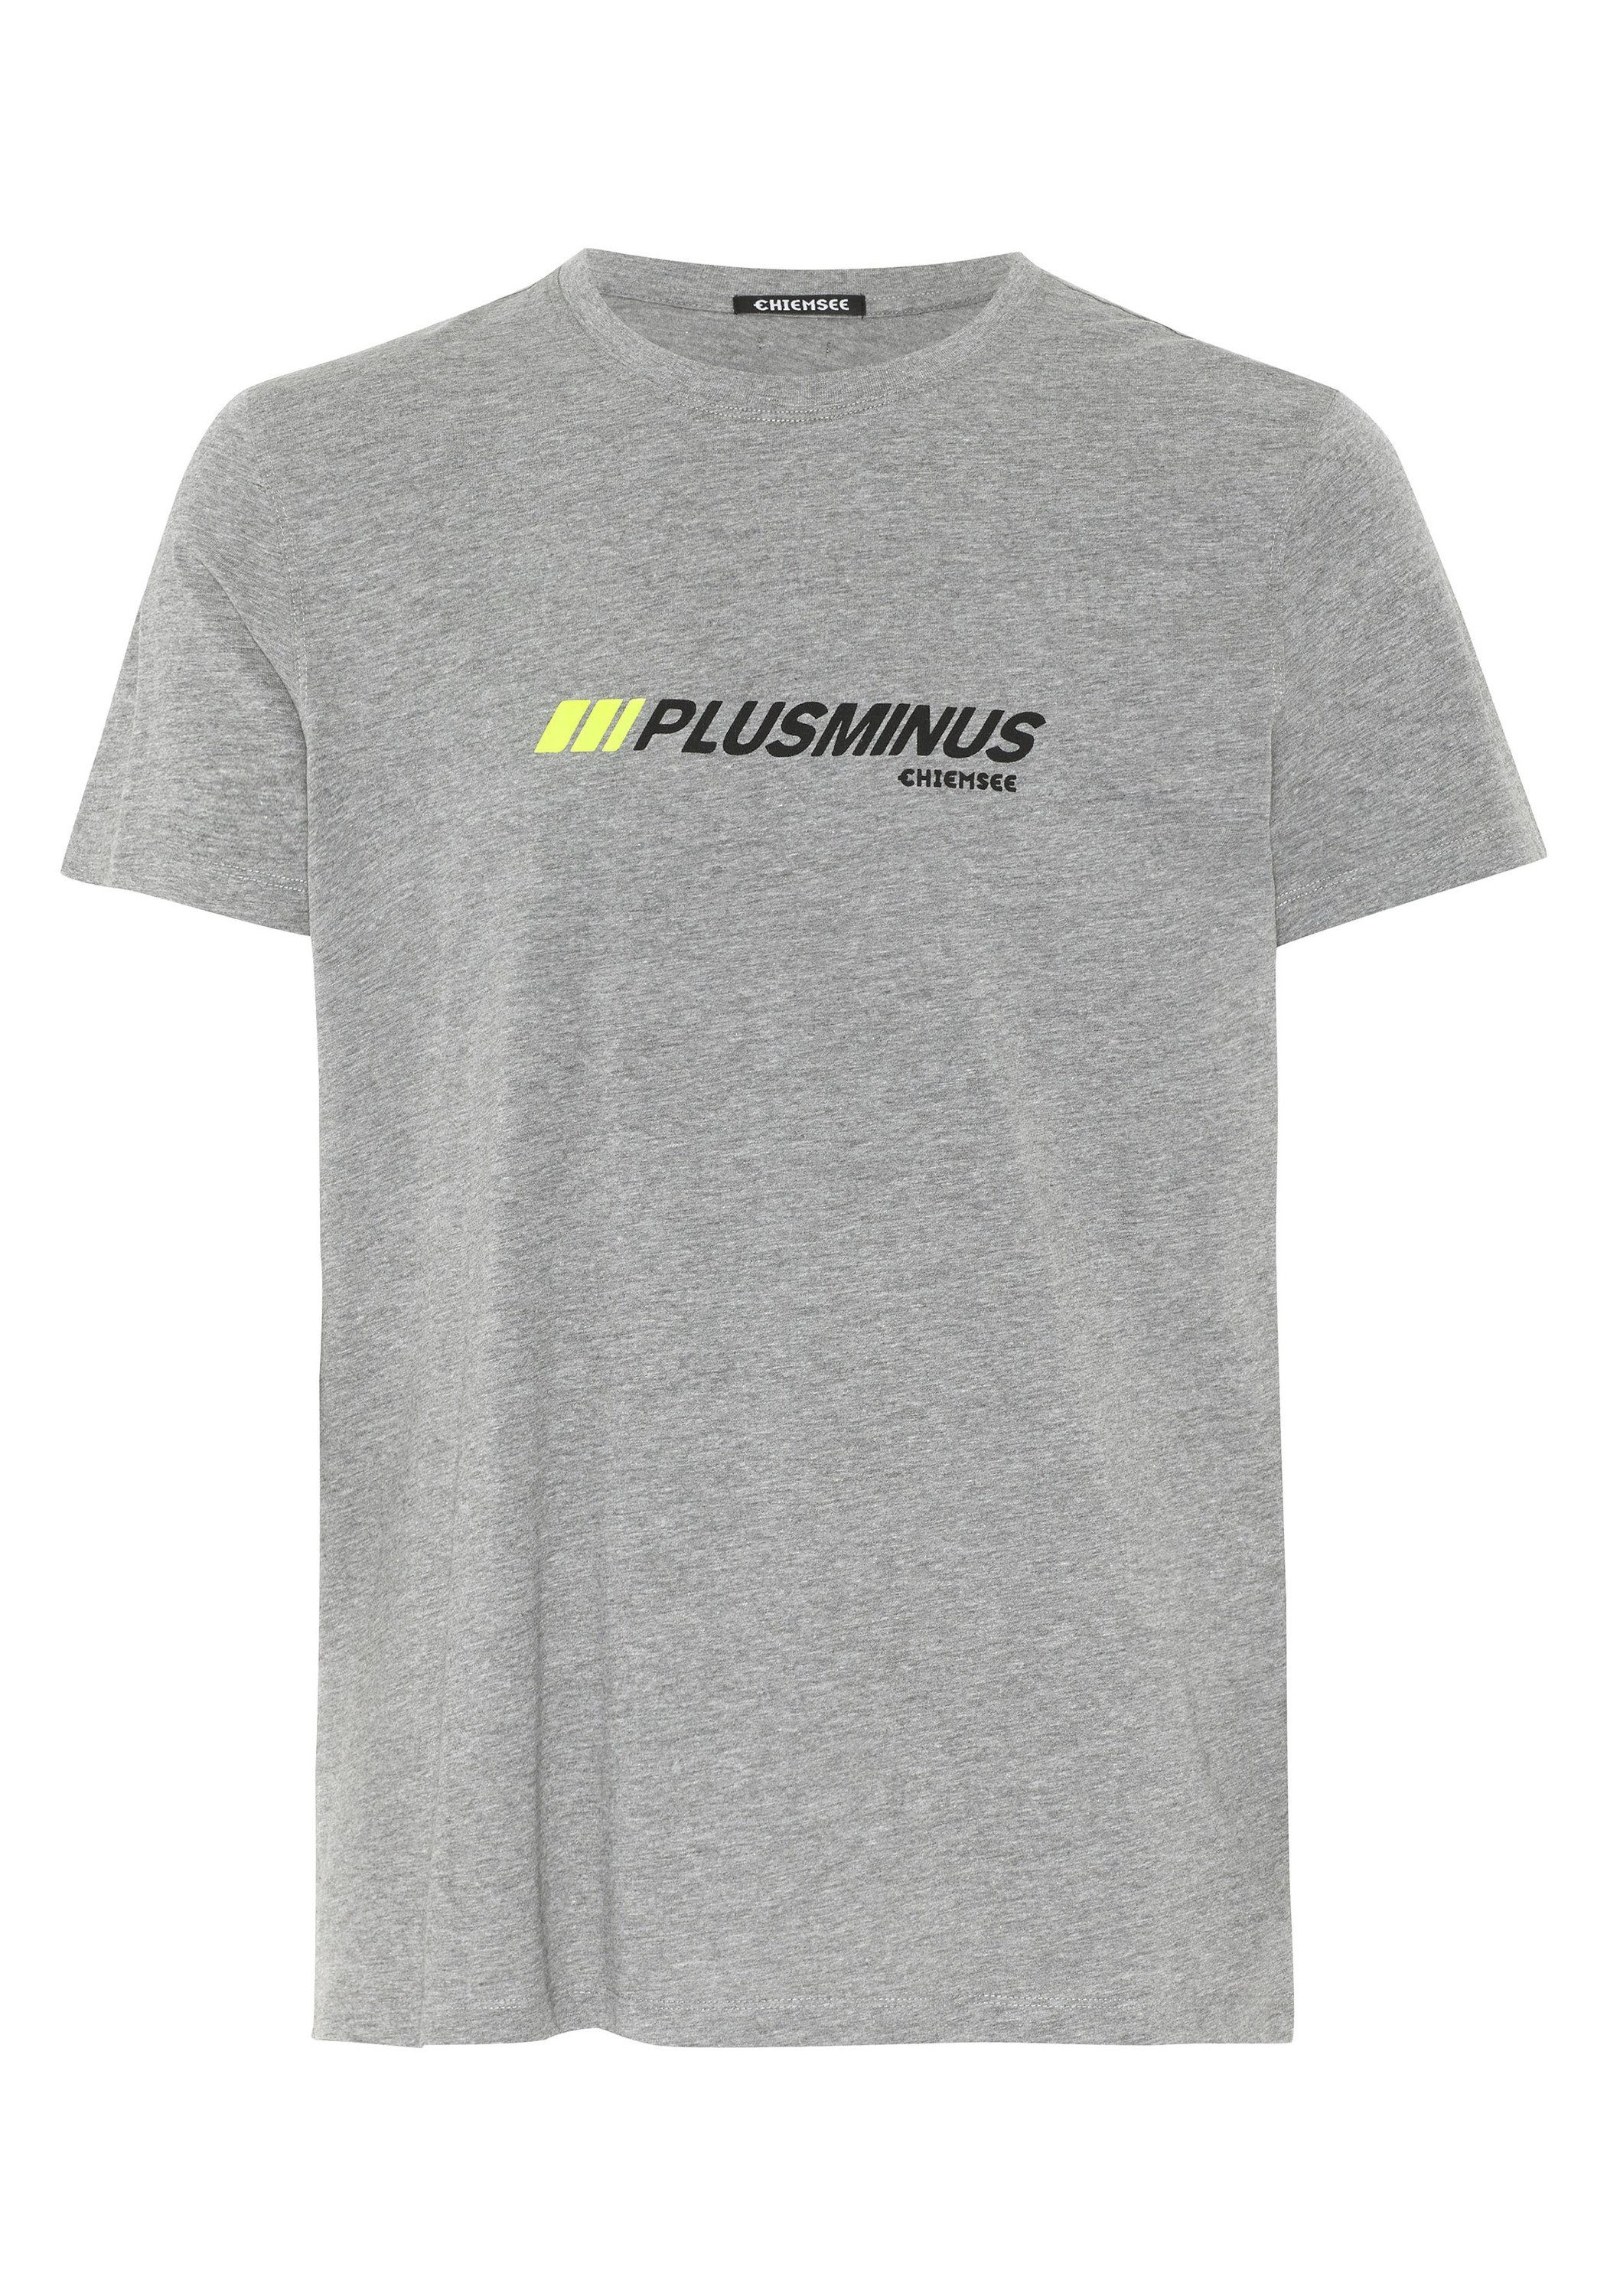 Chiemsee Print-Shirt T-Shirt mit PLUS-MINUS-Print 1 Medium Melange